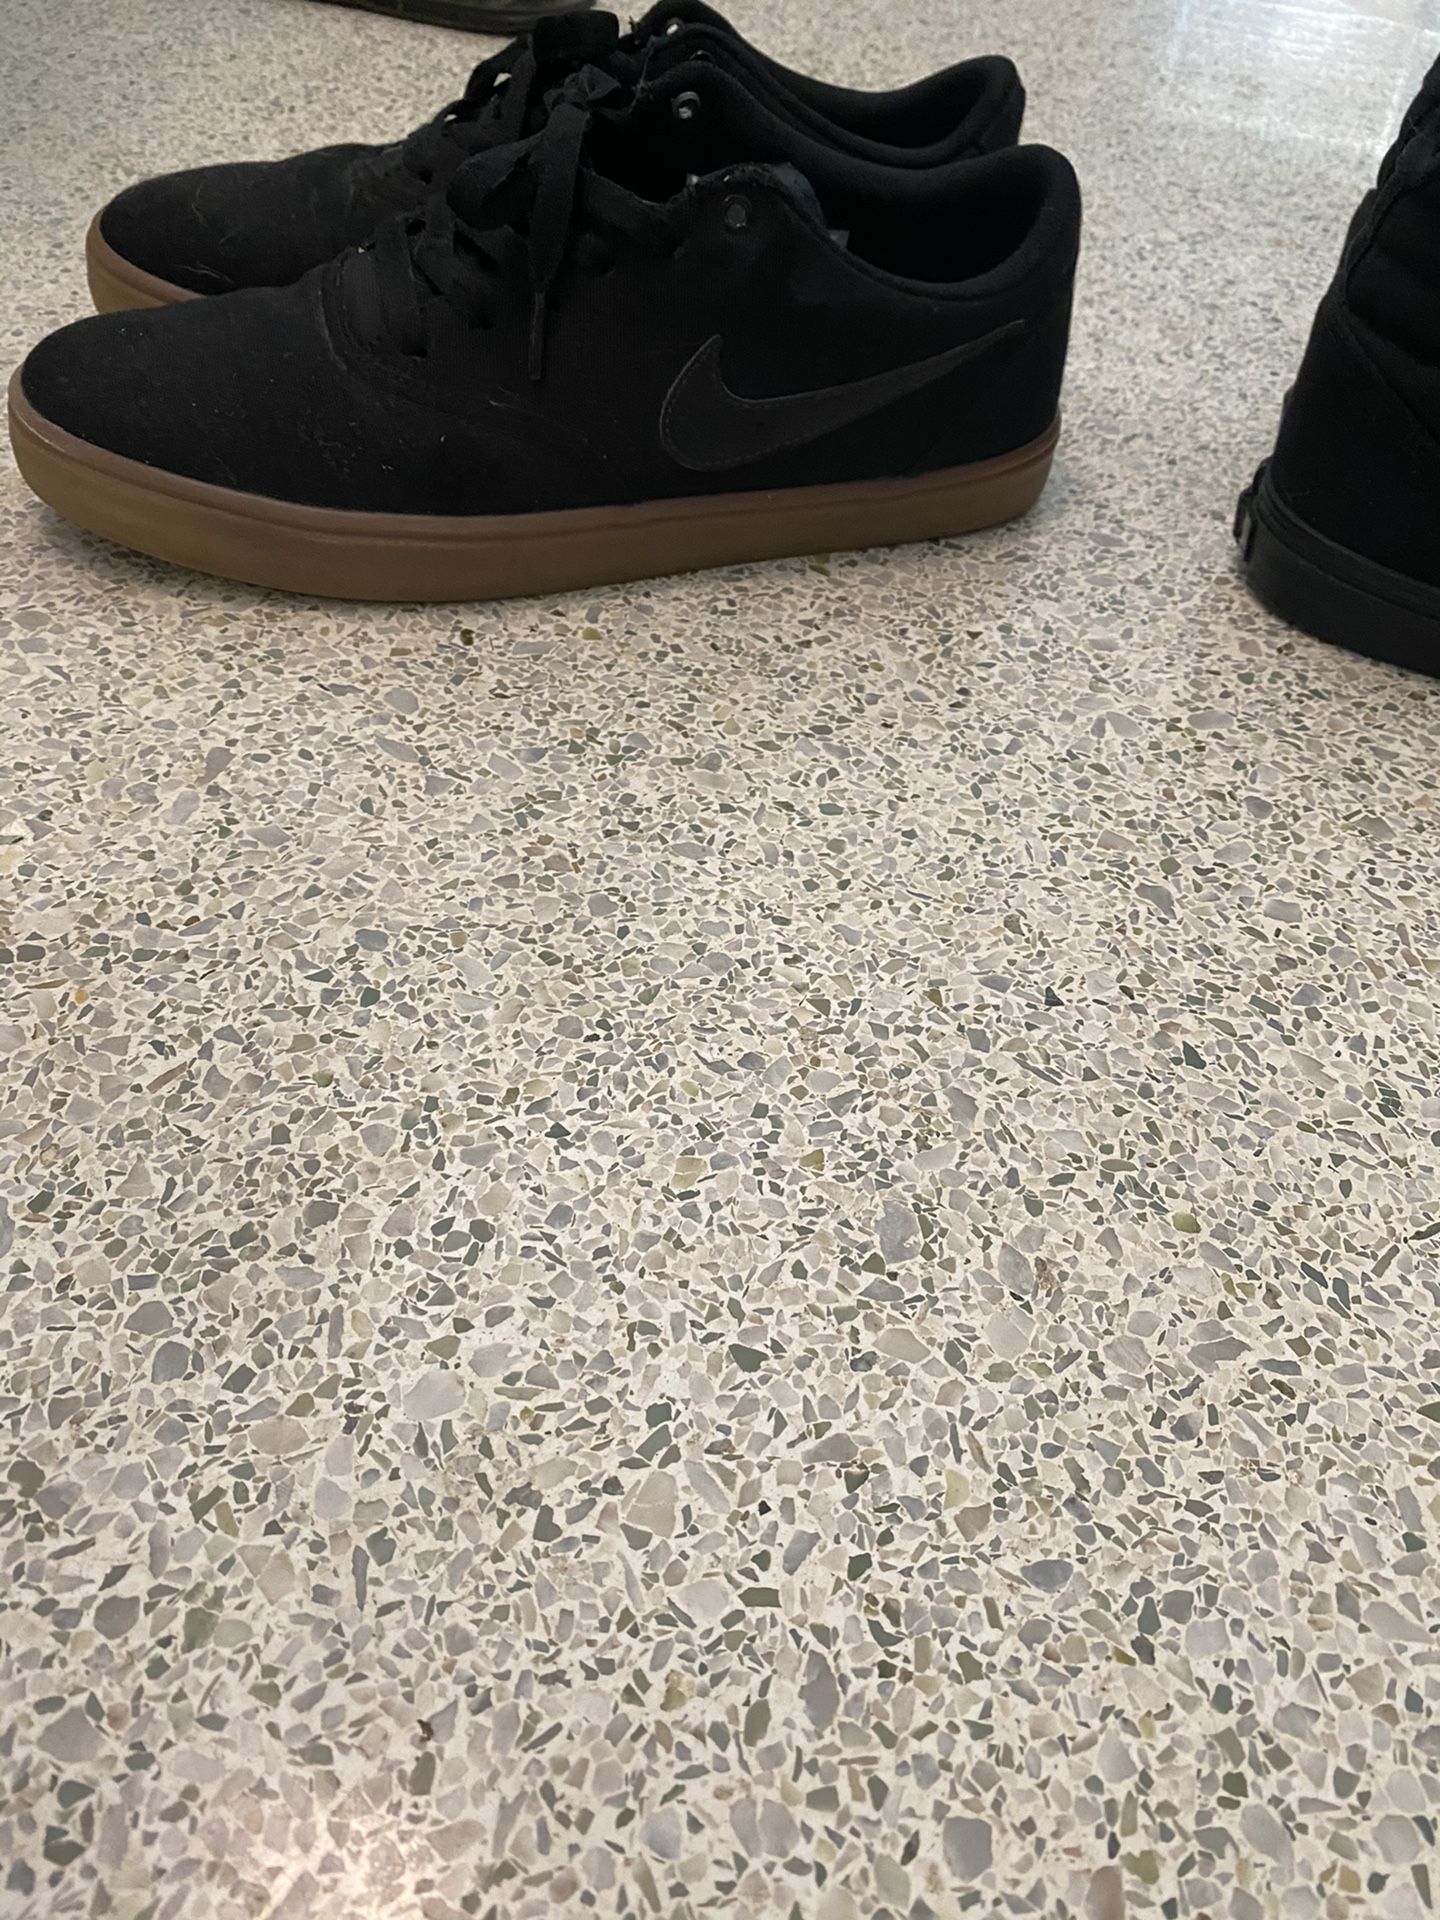 skateboard shoes size 12